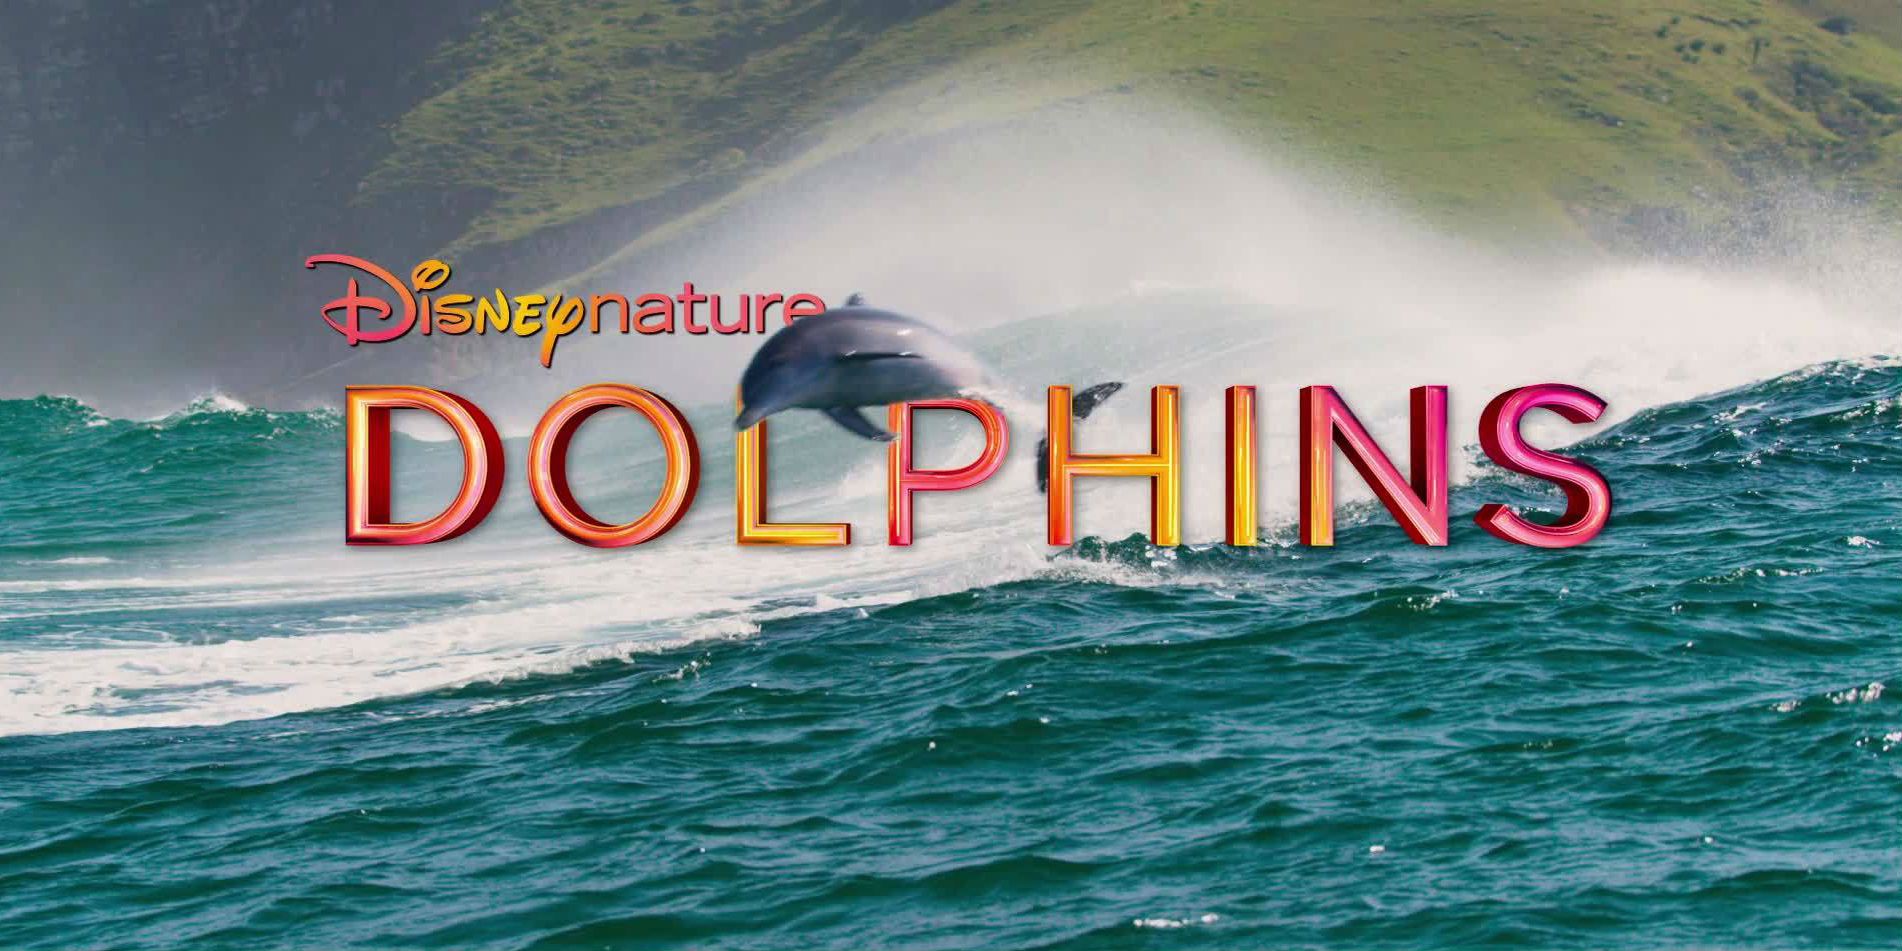 Disneynature's Dolphins